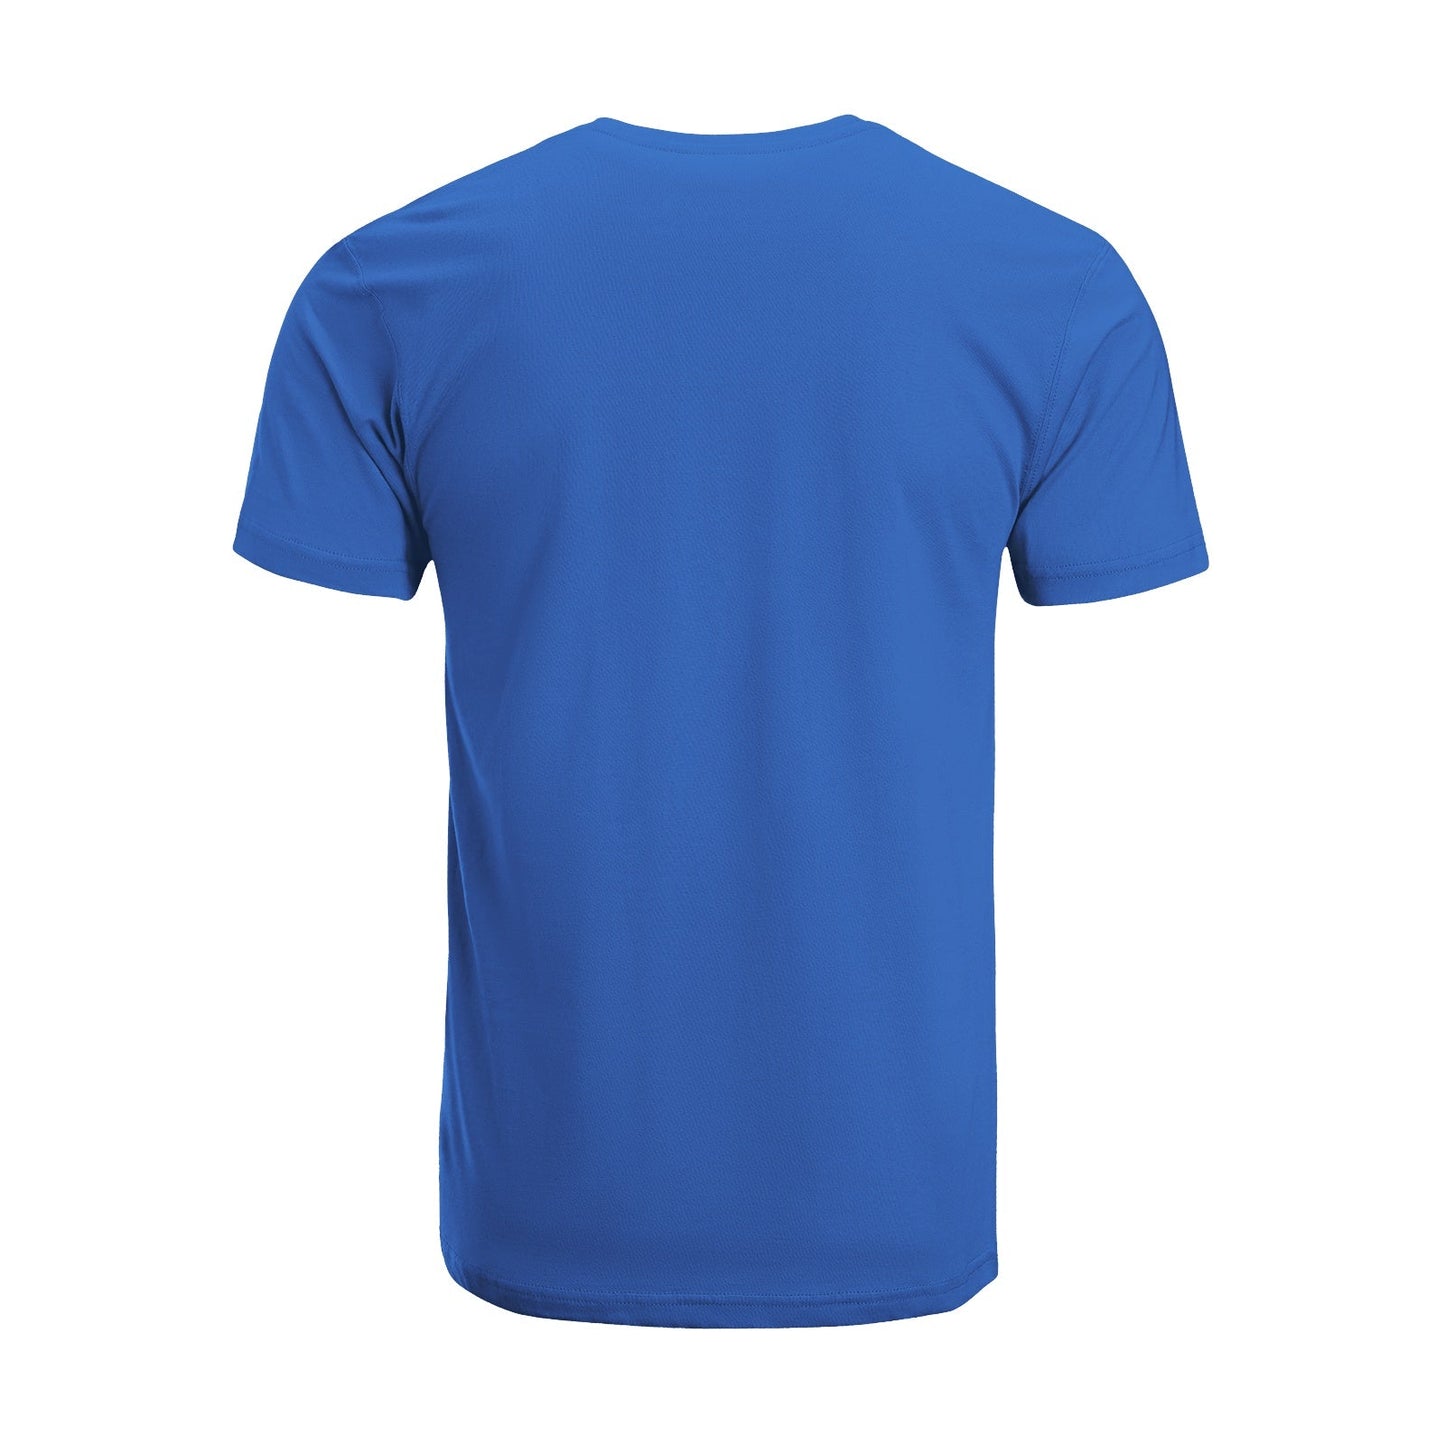 Unisex Short Sleeve Crew Neck Cotton Jersey T-Shirt Gym No. 19 - Tara-Outfits.com